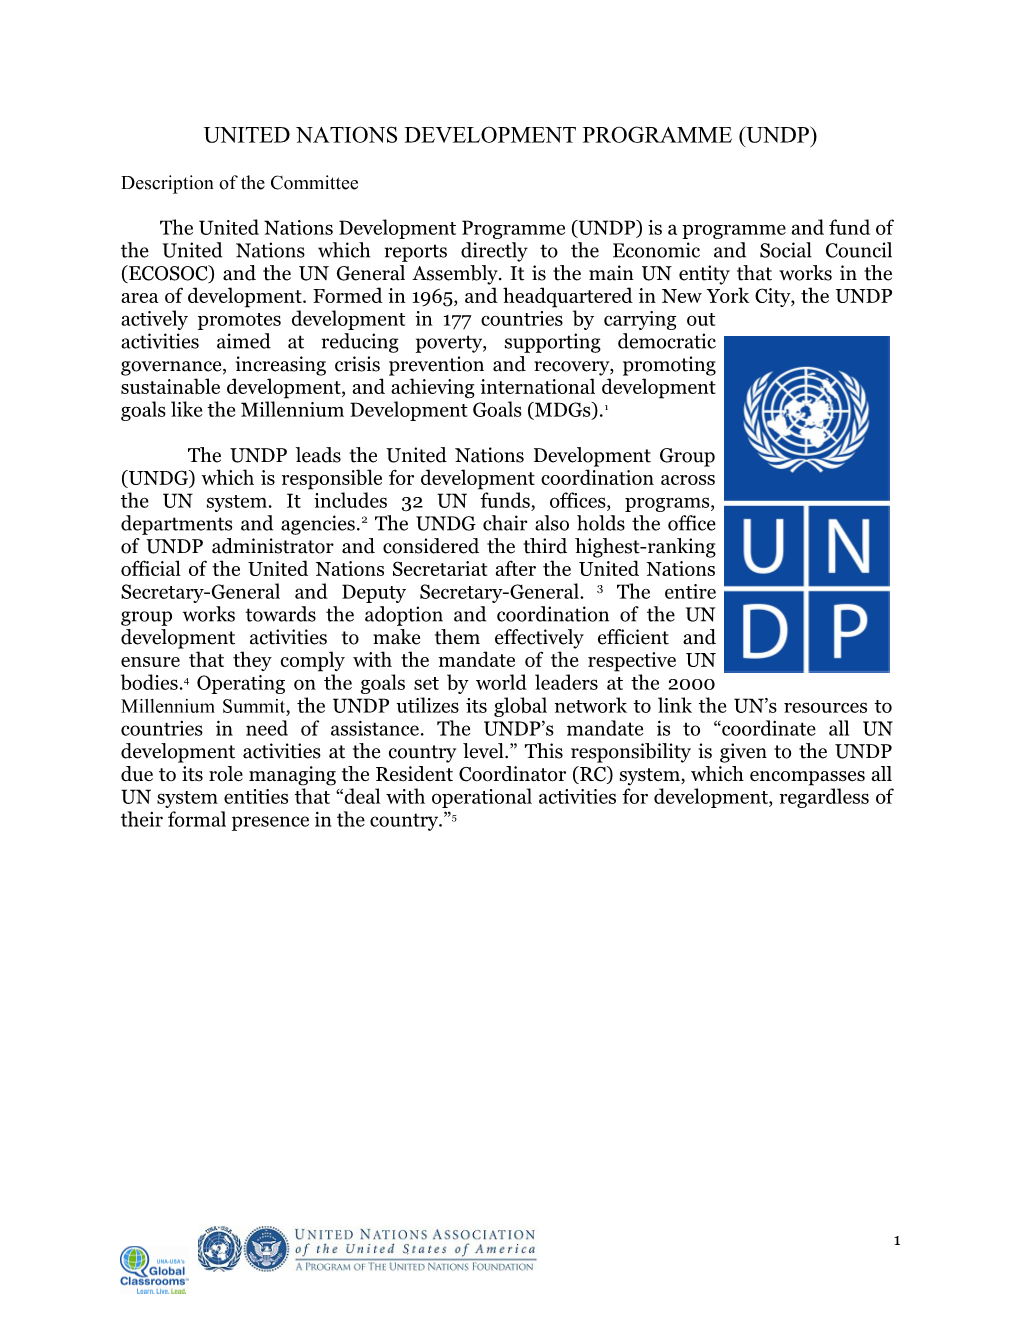 United Nations Development Programme (Undp)